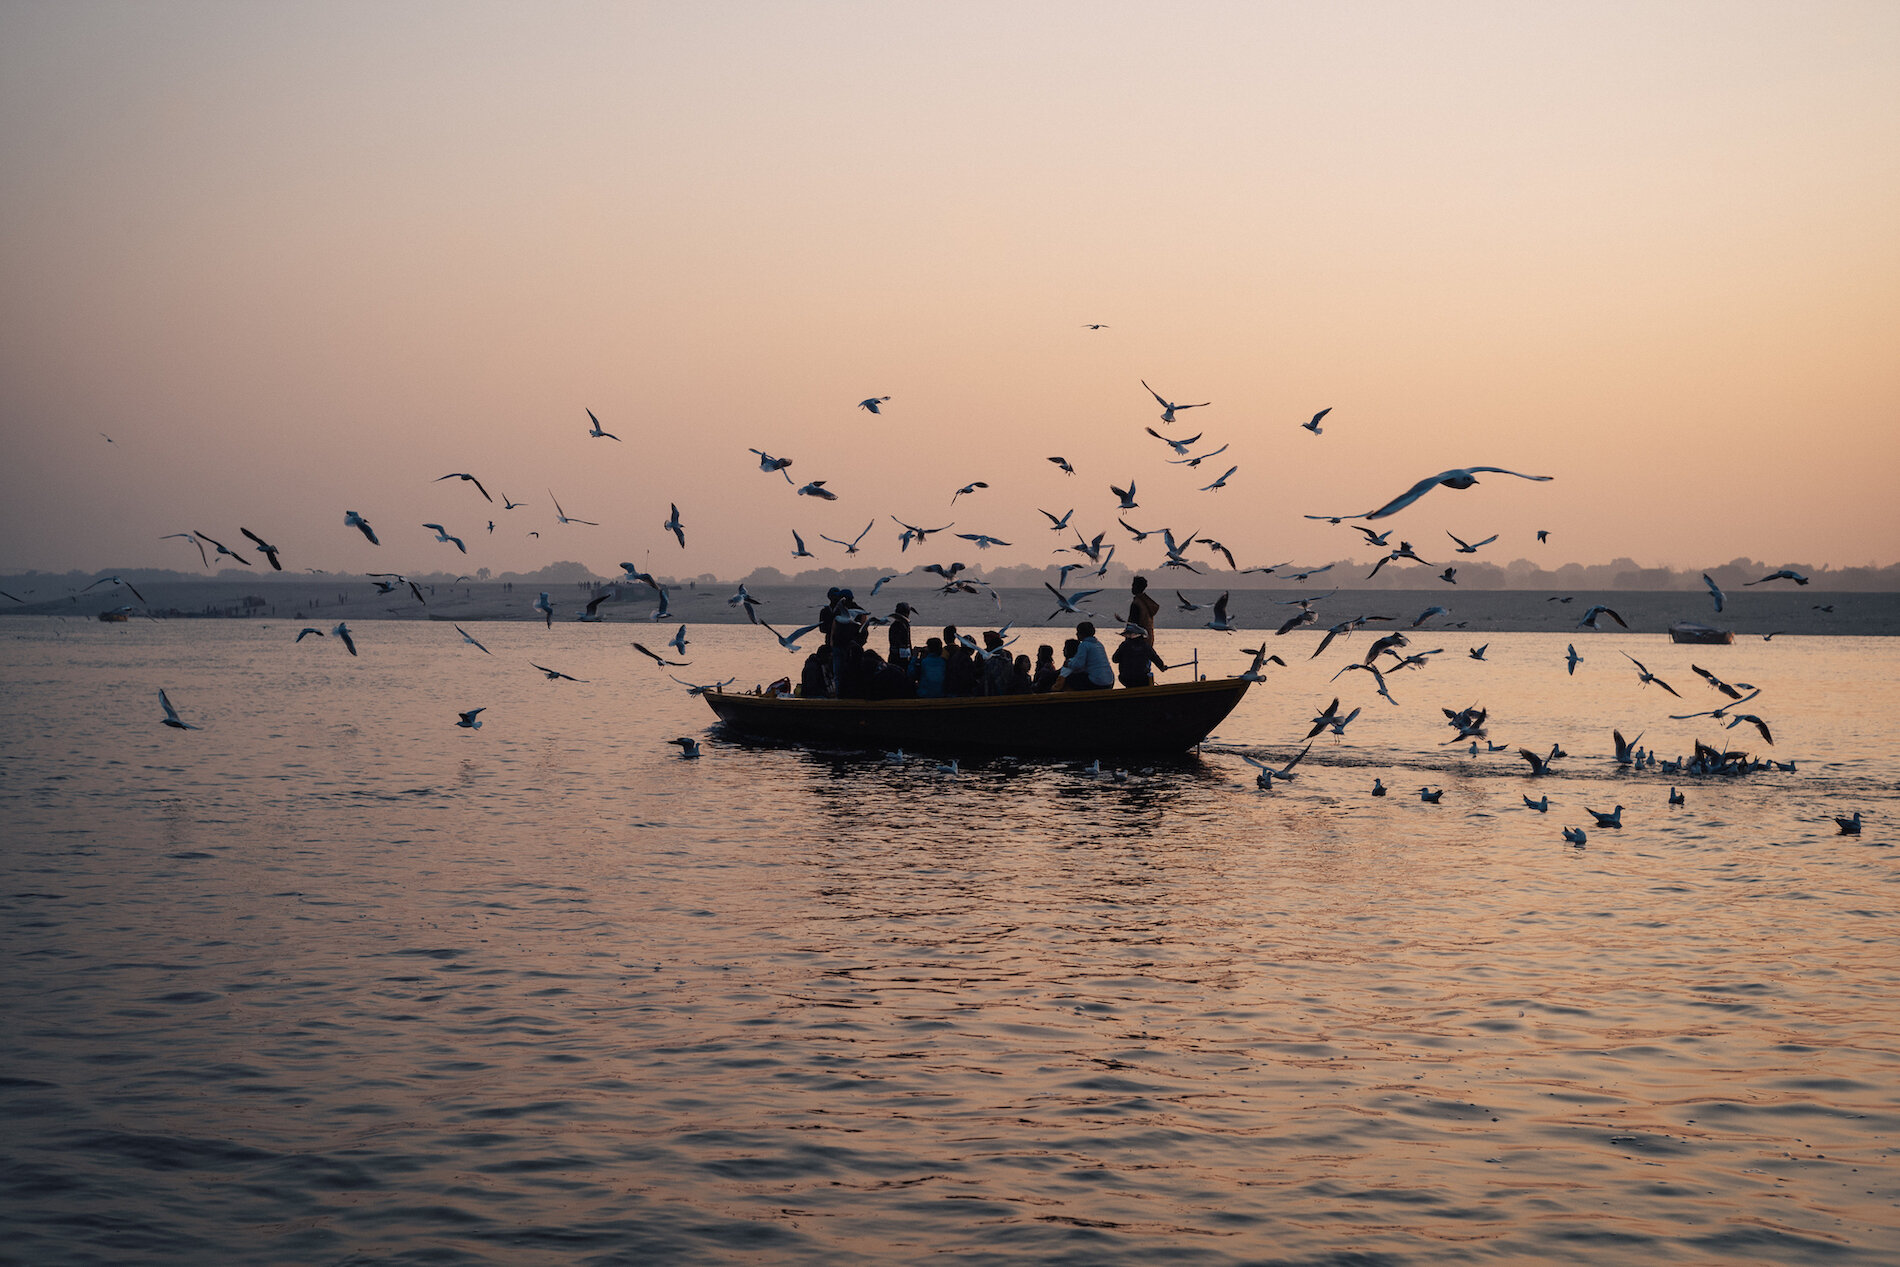  Dawn on the Ganga 